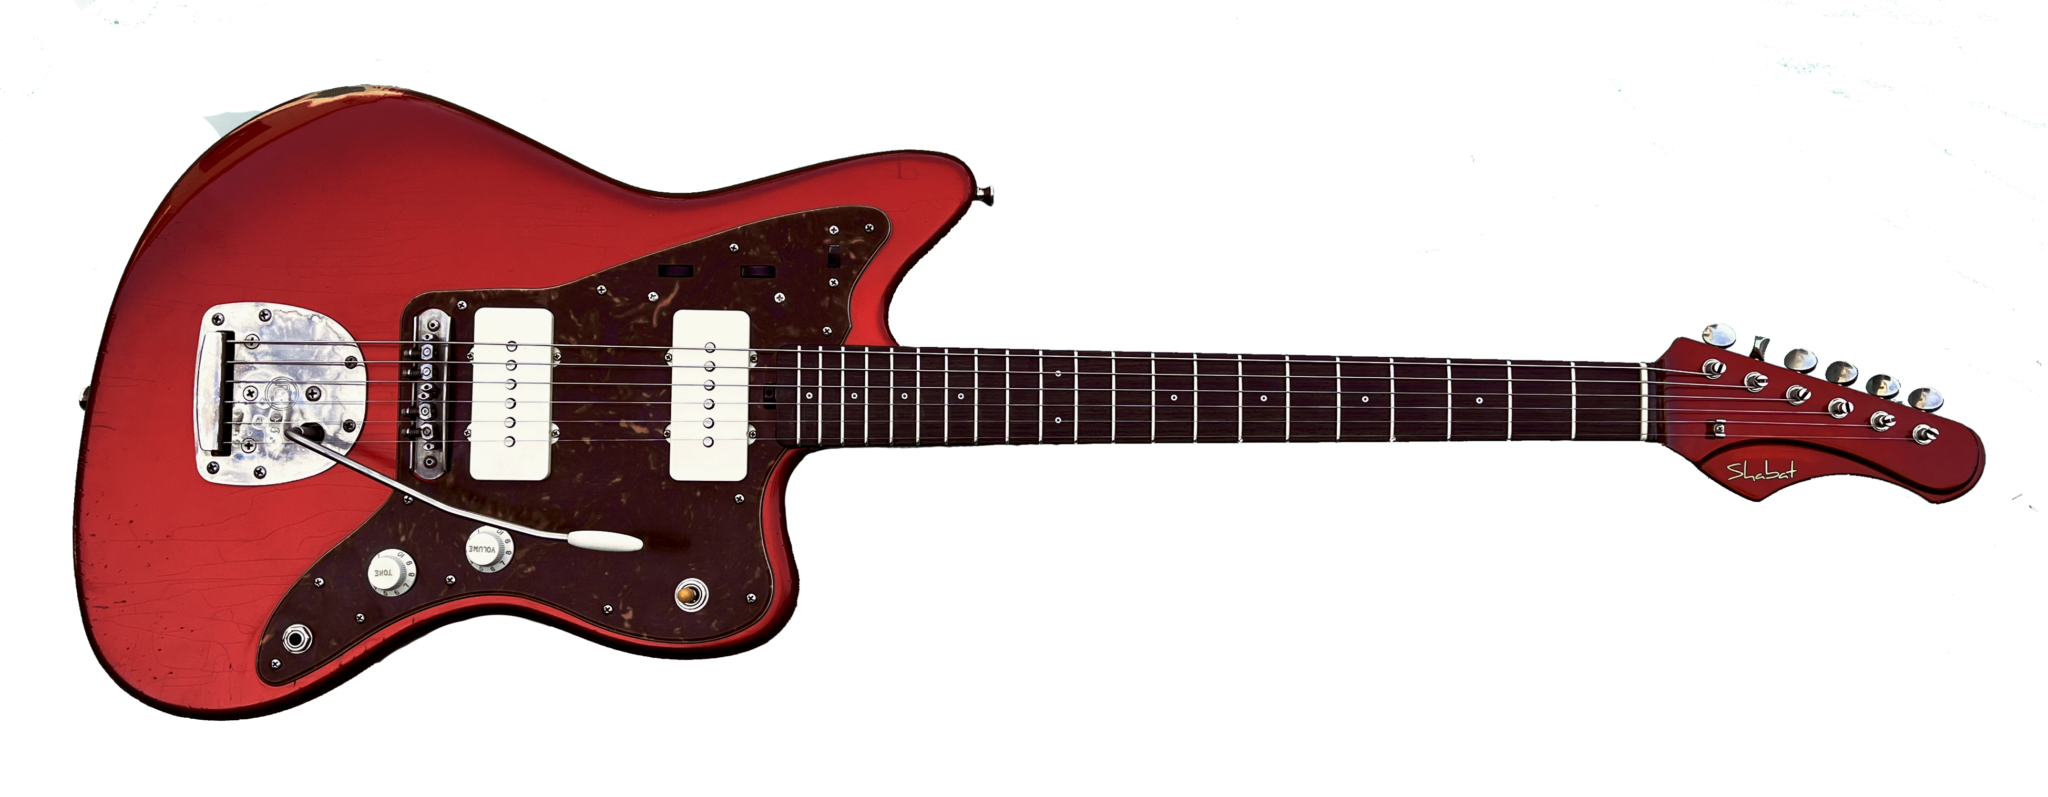 Shabat Leopard Custom Electric Guitar